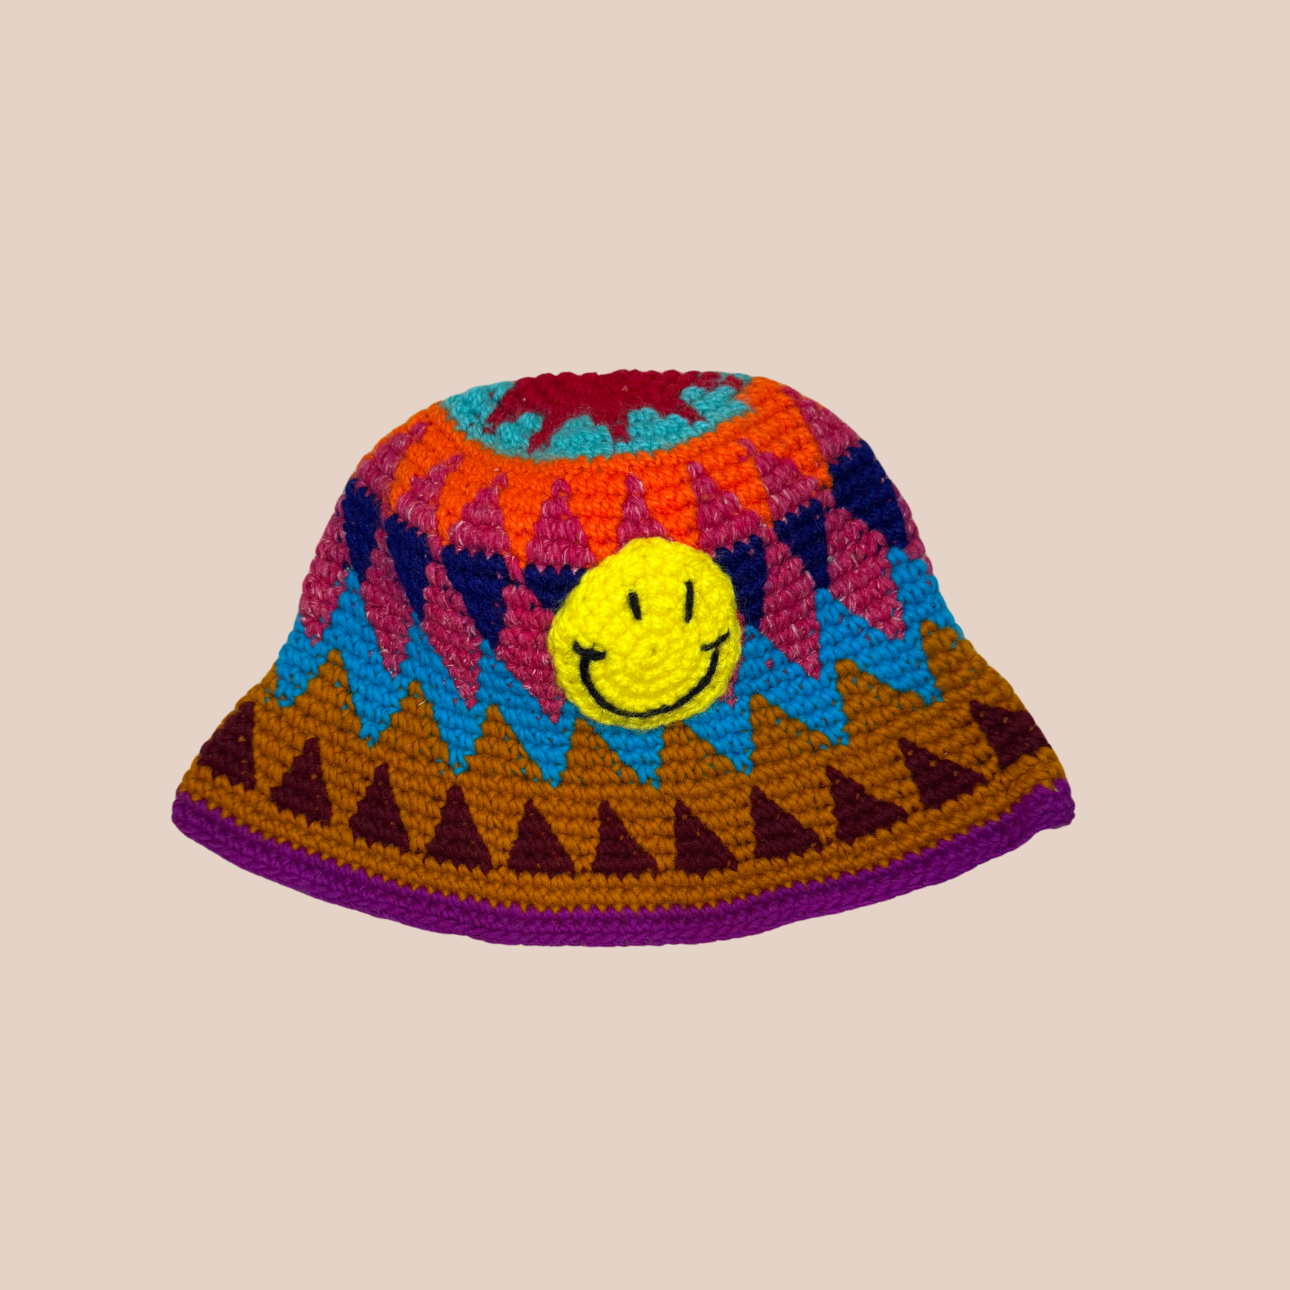 Image du bucket hat motif smiley de Maison Badigo, bucket hat (bob) multicolore unique et tendance